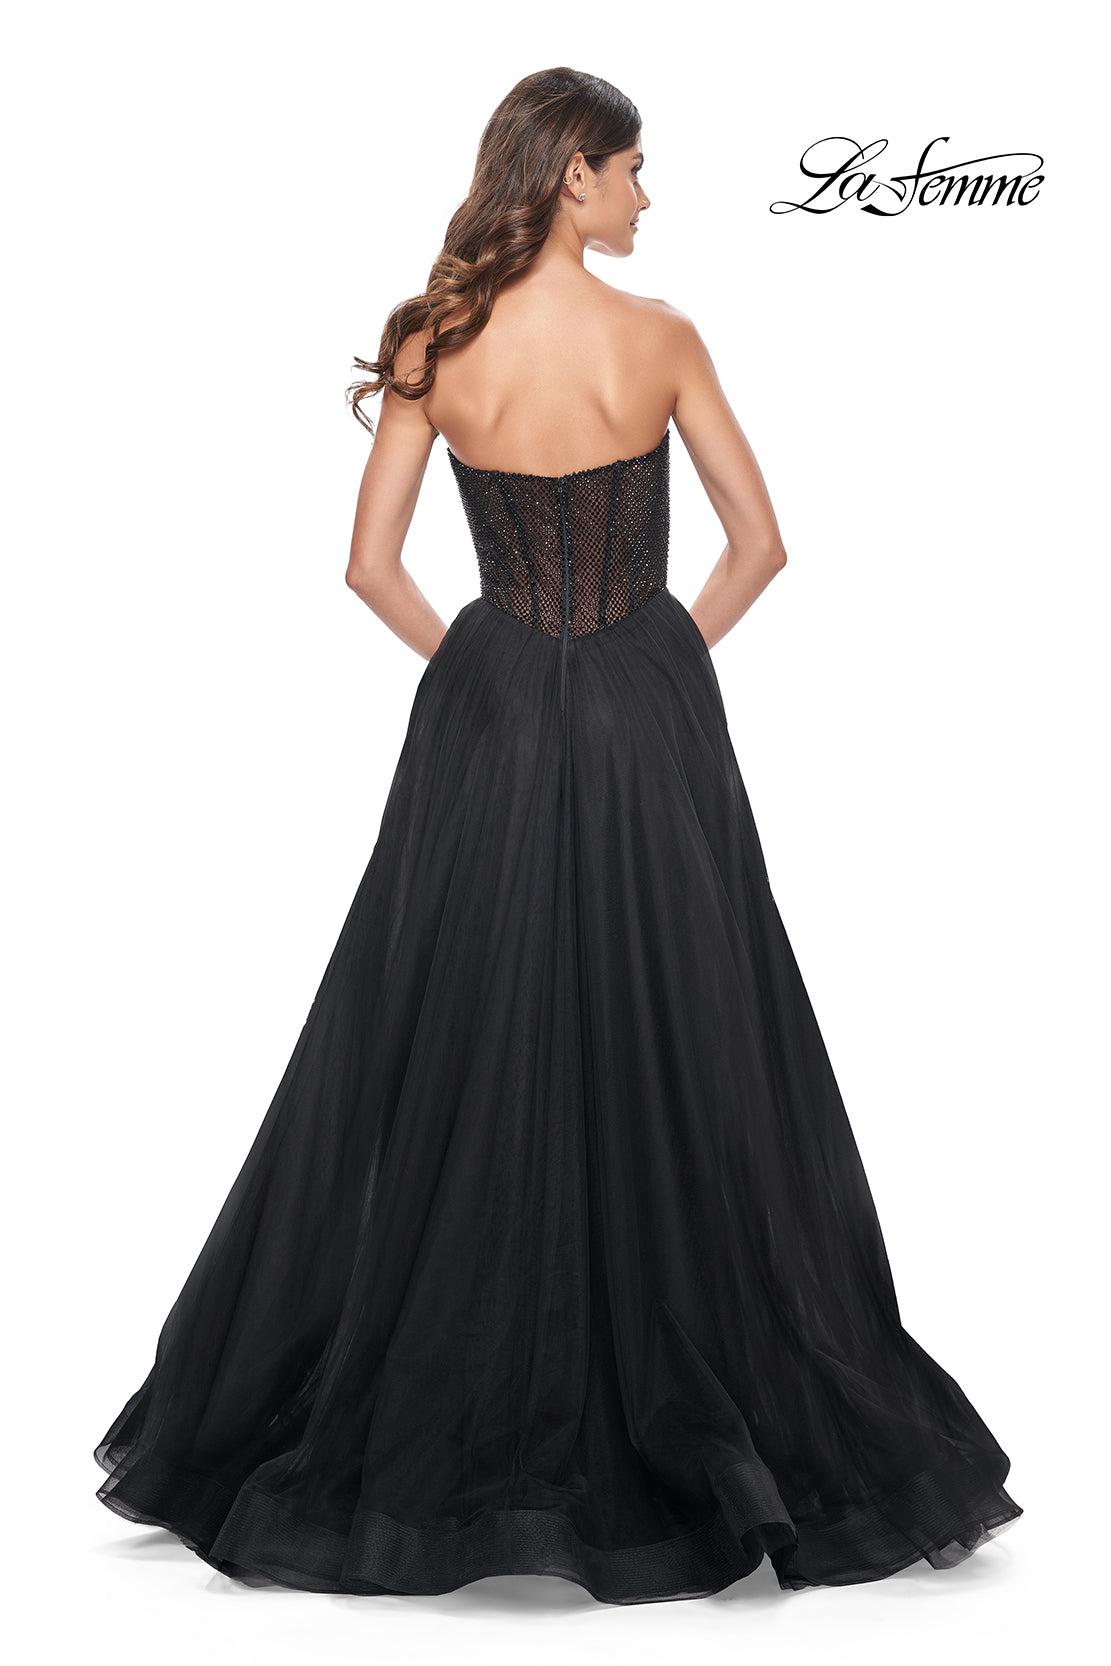 La-Femme-32216-Sweetheart-Neckline-Zipper-Back-High-Slit-Hot-Stone-Fishnet-Tulle-A-Line-Black-Evening-Dress-B-Chic-Fashions-Prom-Dress